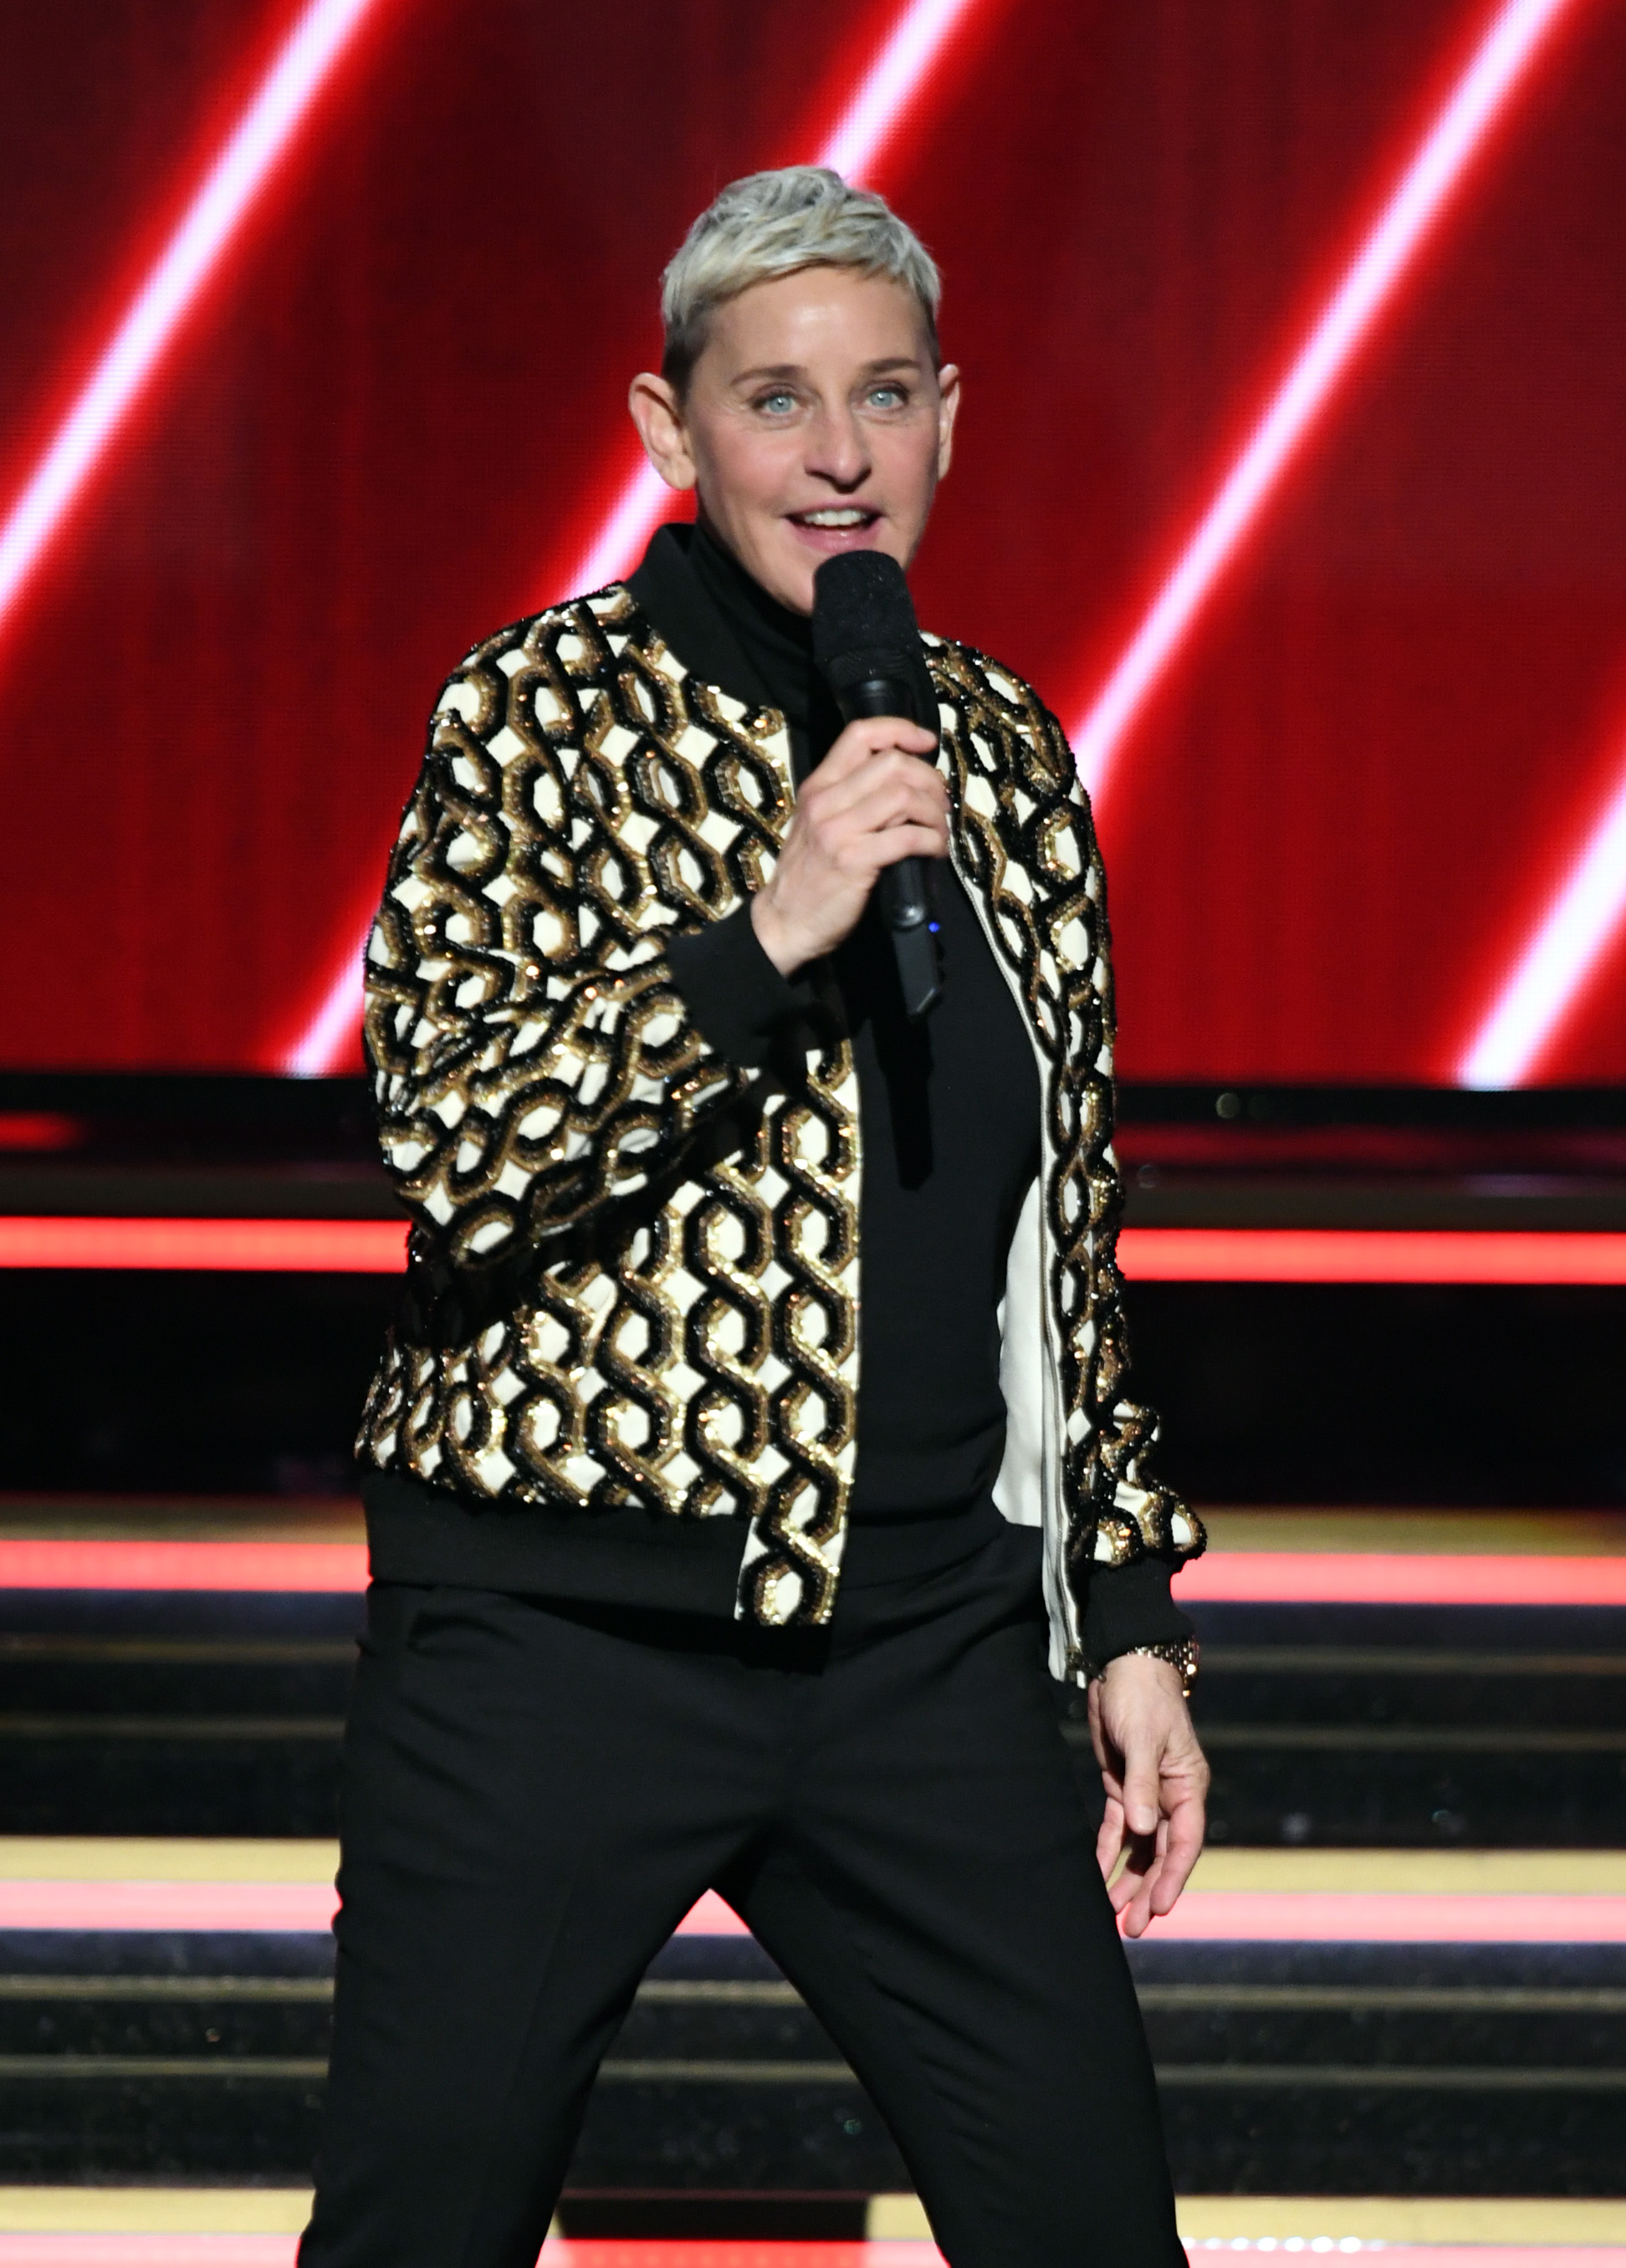 Ellen DeGeneres' Instincts 'Failing Her' Ahead of Comedy Tour